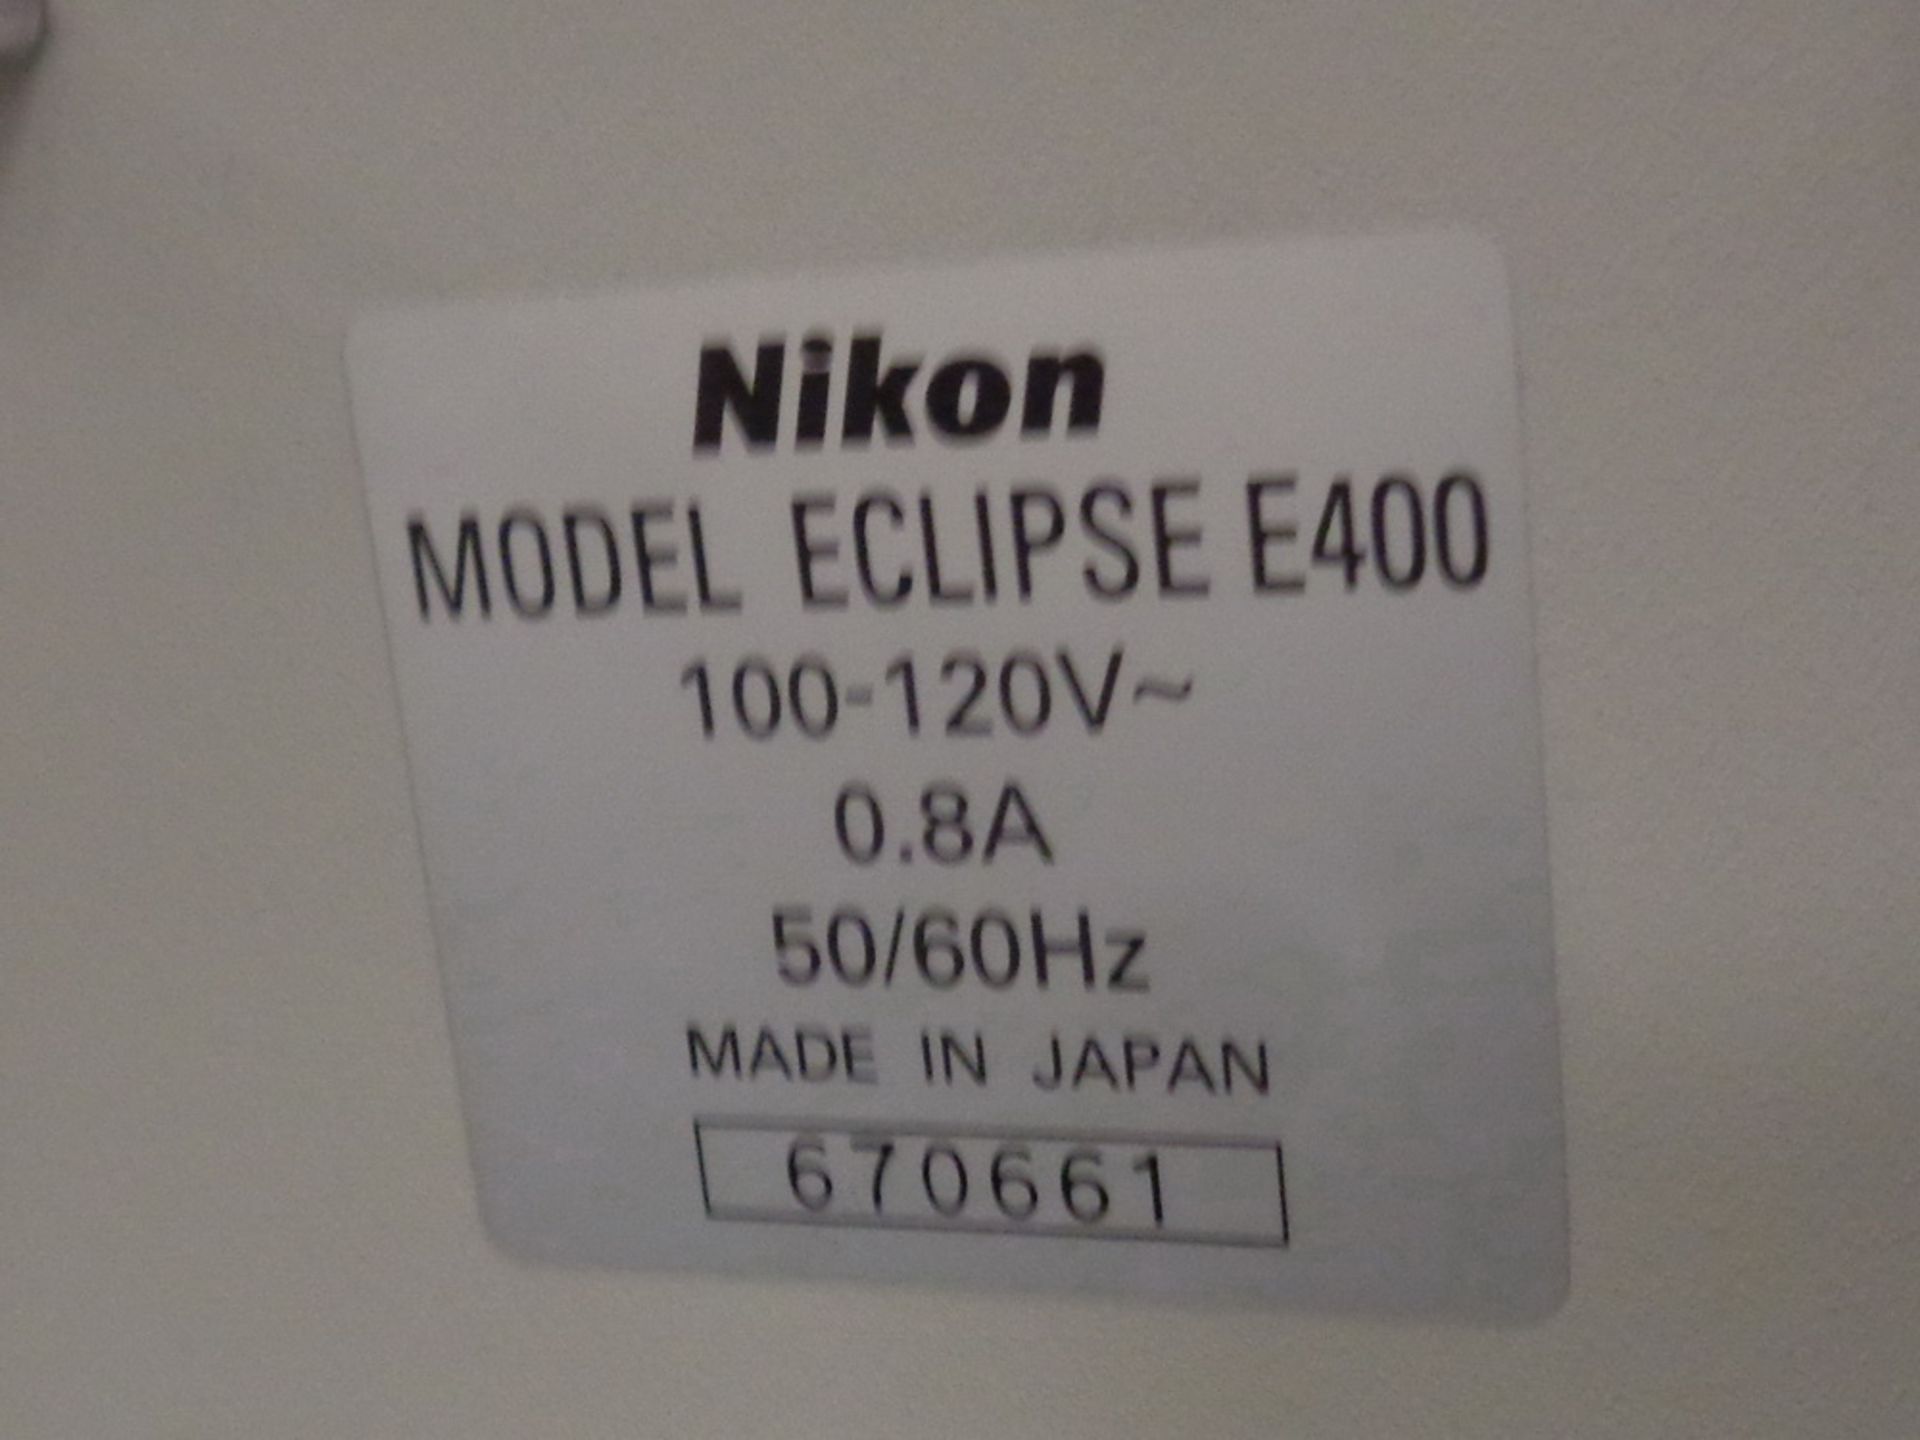 Nikon Eclipse E400 Multihead Dual View Teaching Microscope - Image 4 of 4